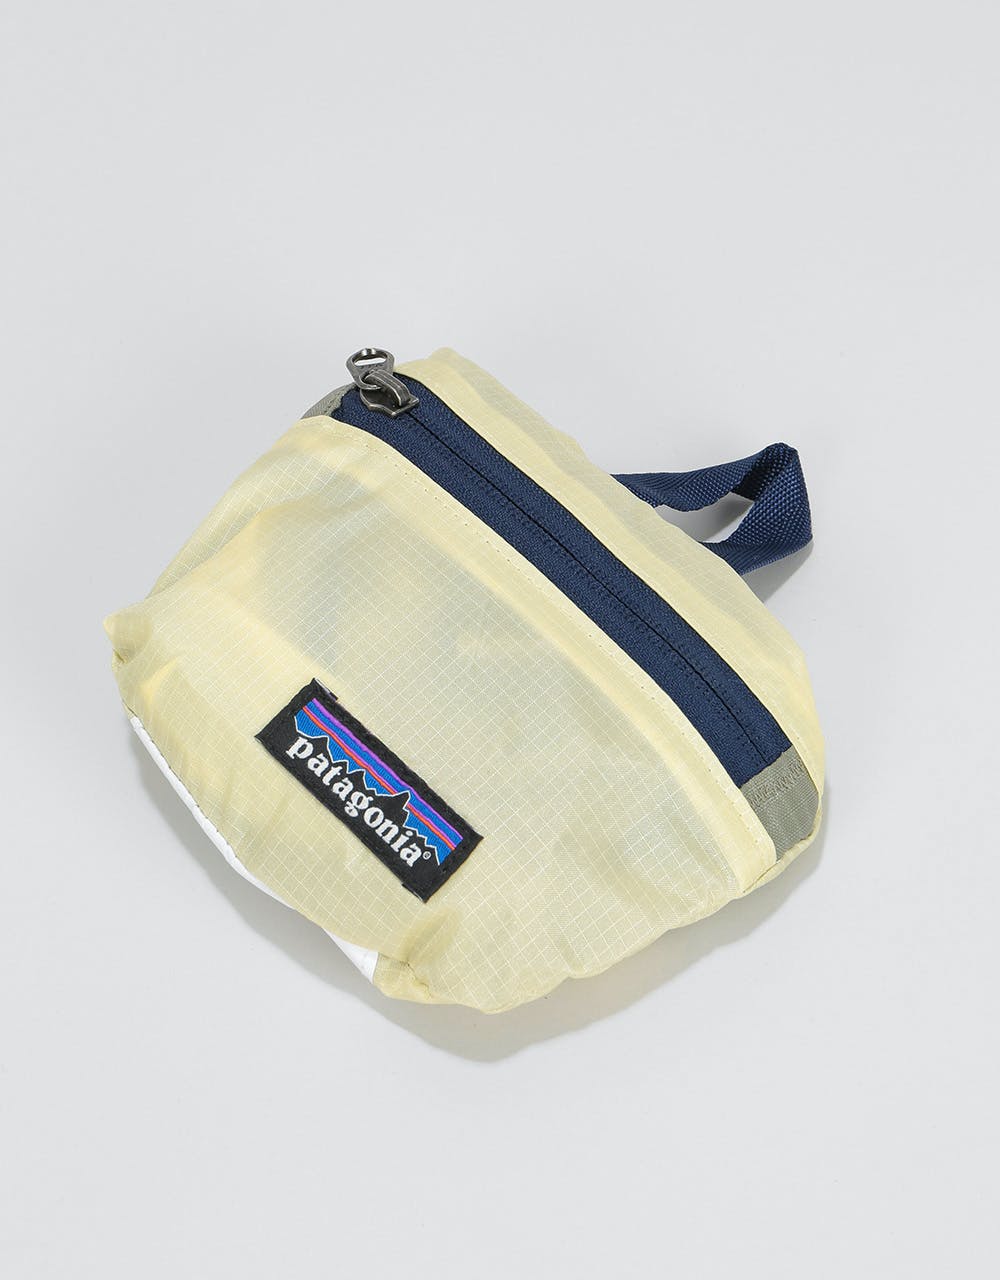 Patagonia Lightweight Travel Mini Cross Body Bag - Resin Yellow